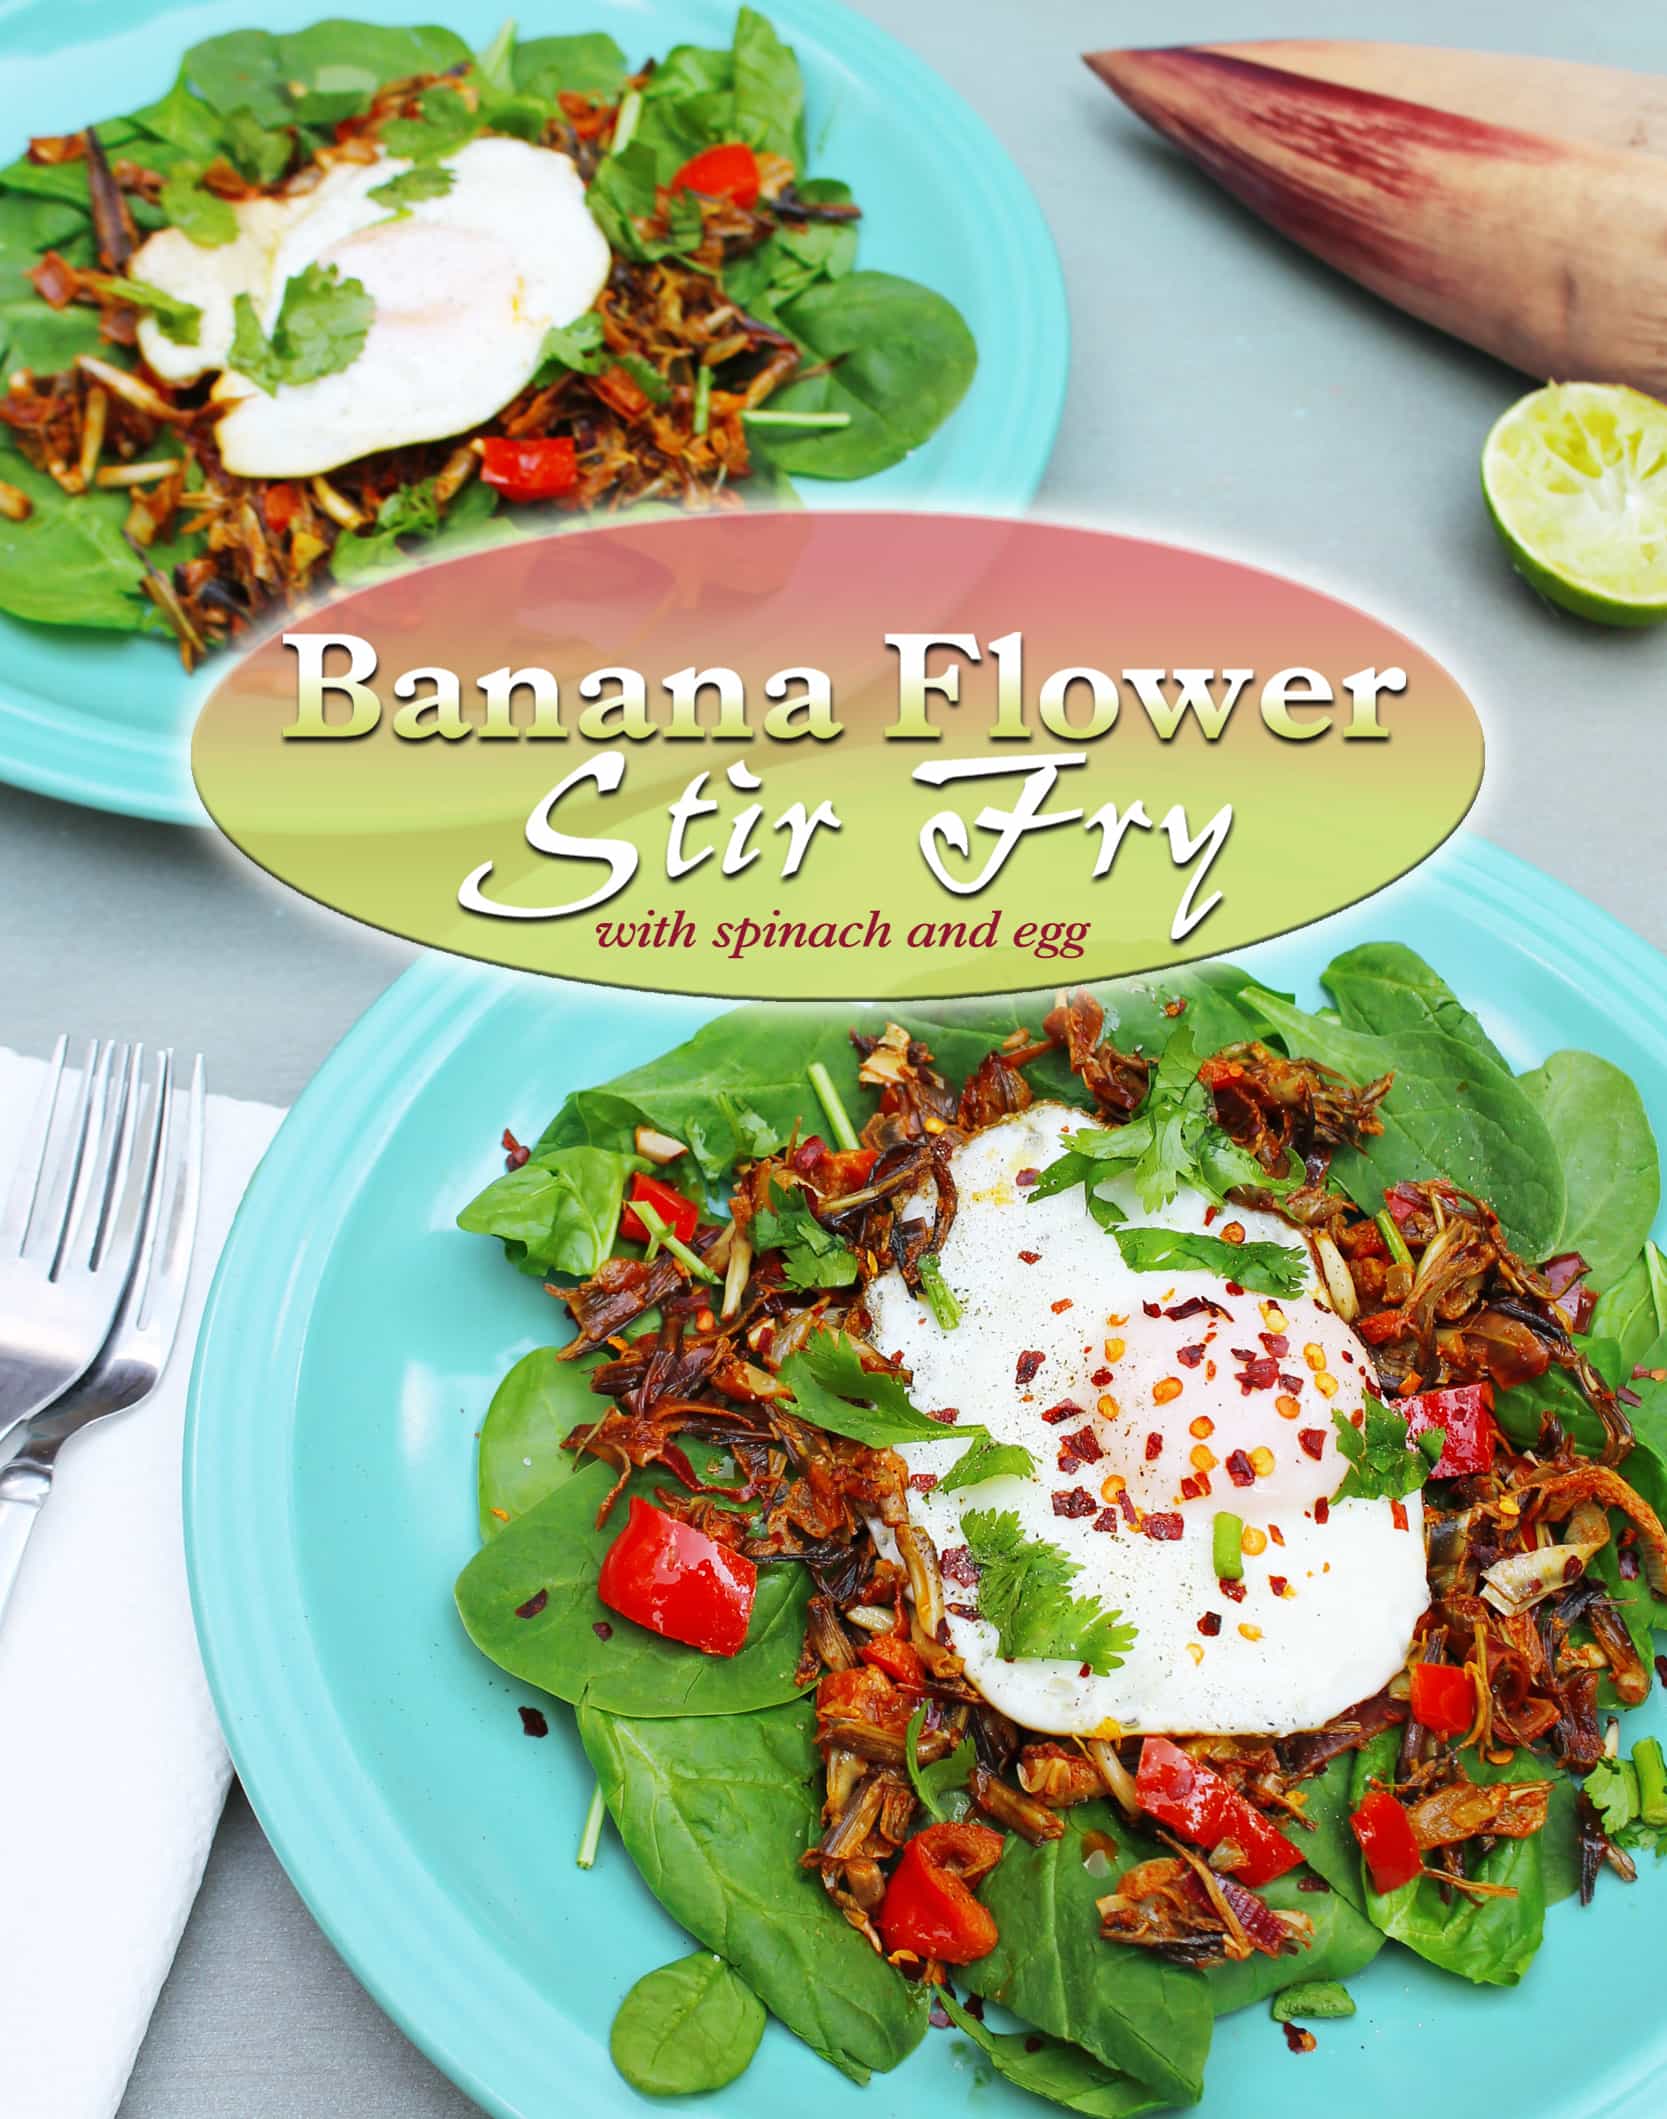 banana flower stir fry served with salad